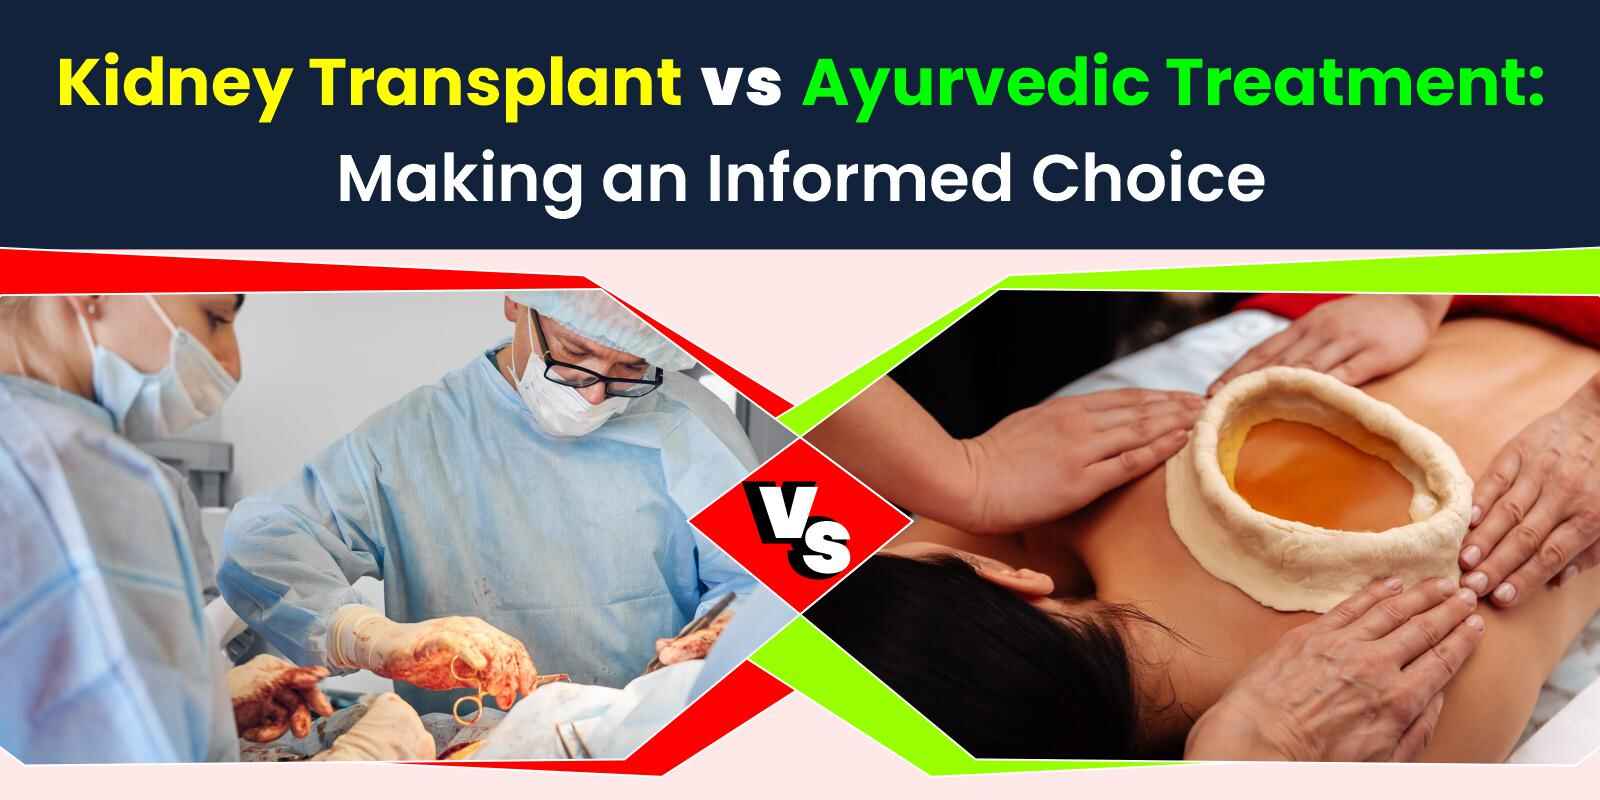 Kidney Transplant vs. Ayurvedic Treatment: Making an Informed Choice